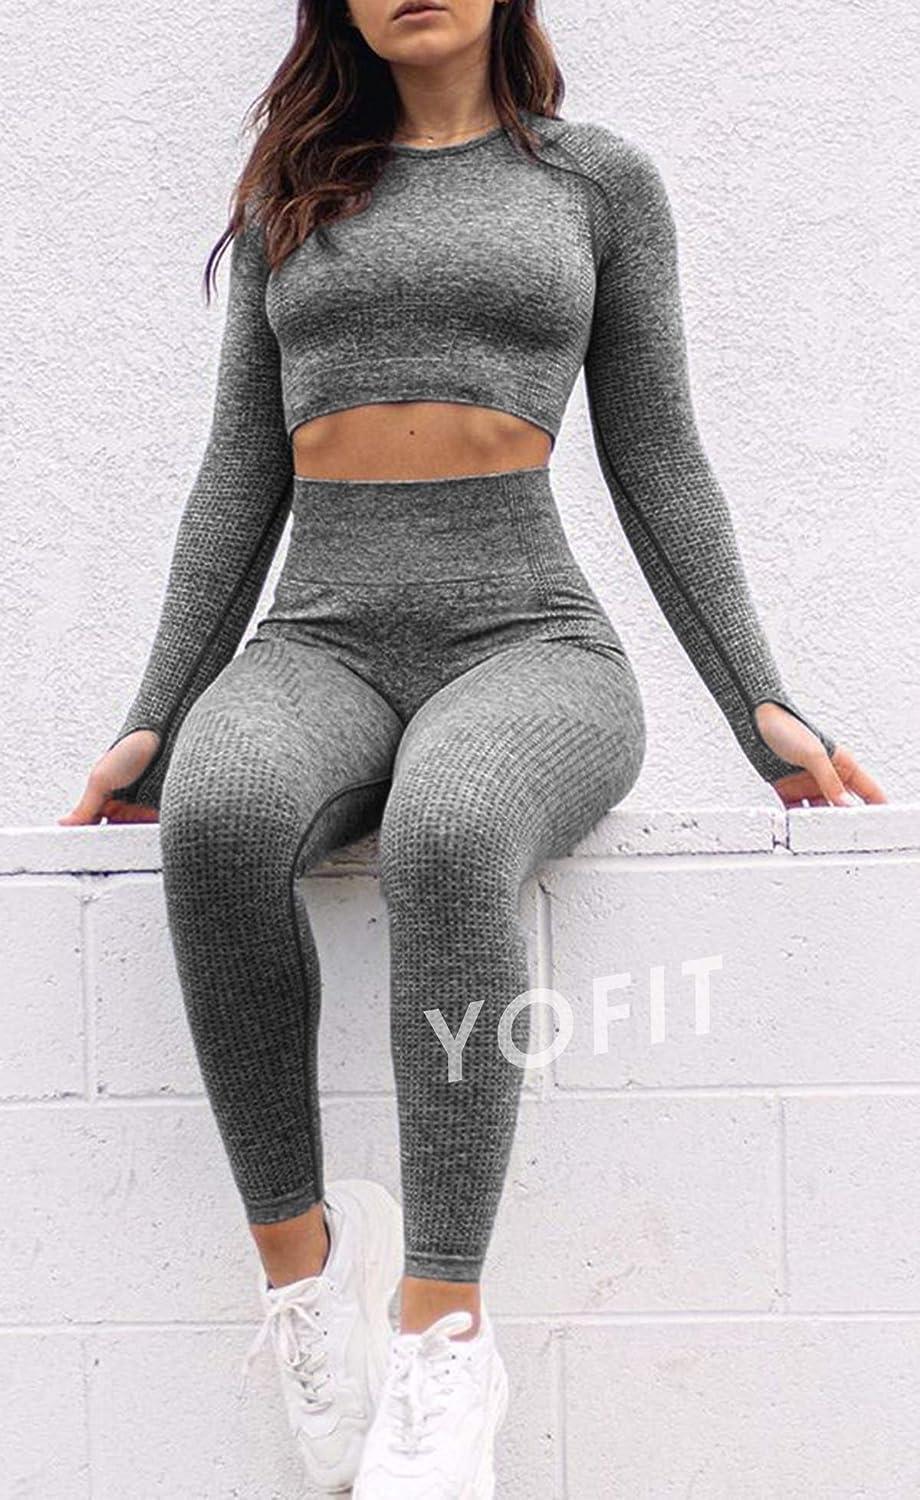 YOGA Pants High Waisted Workout Yoga Leggings with Hole - I Shop Turkey